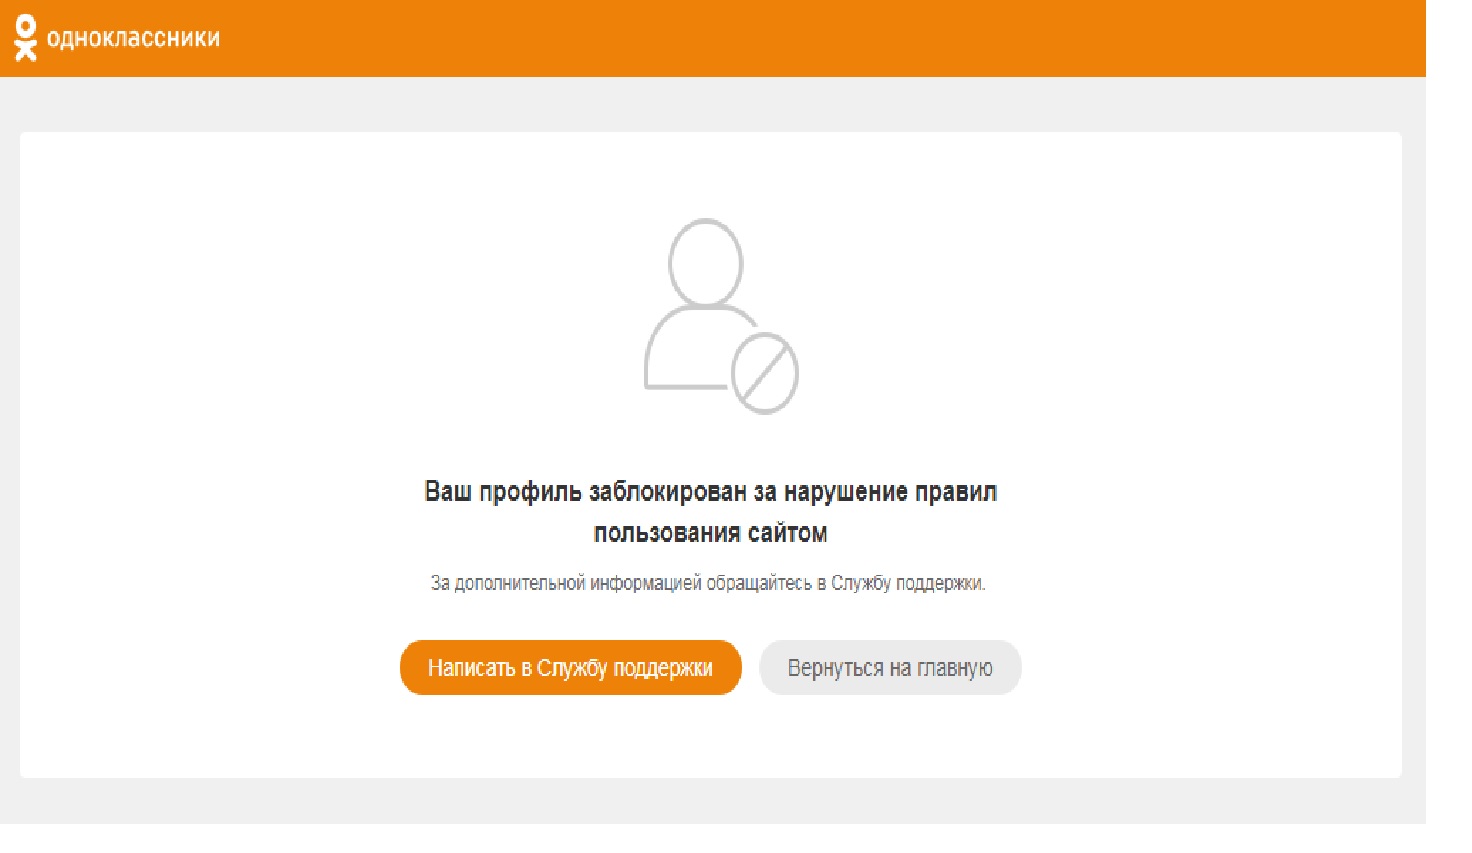 Заблокировали страницу за нарушение правил сайта. Профиль заблокирован. Страница удалена Одноклассники. Ваш профиль заблокирован. Удалённая страница в Одноклассниках.